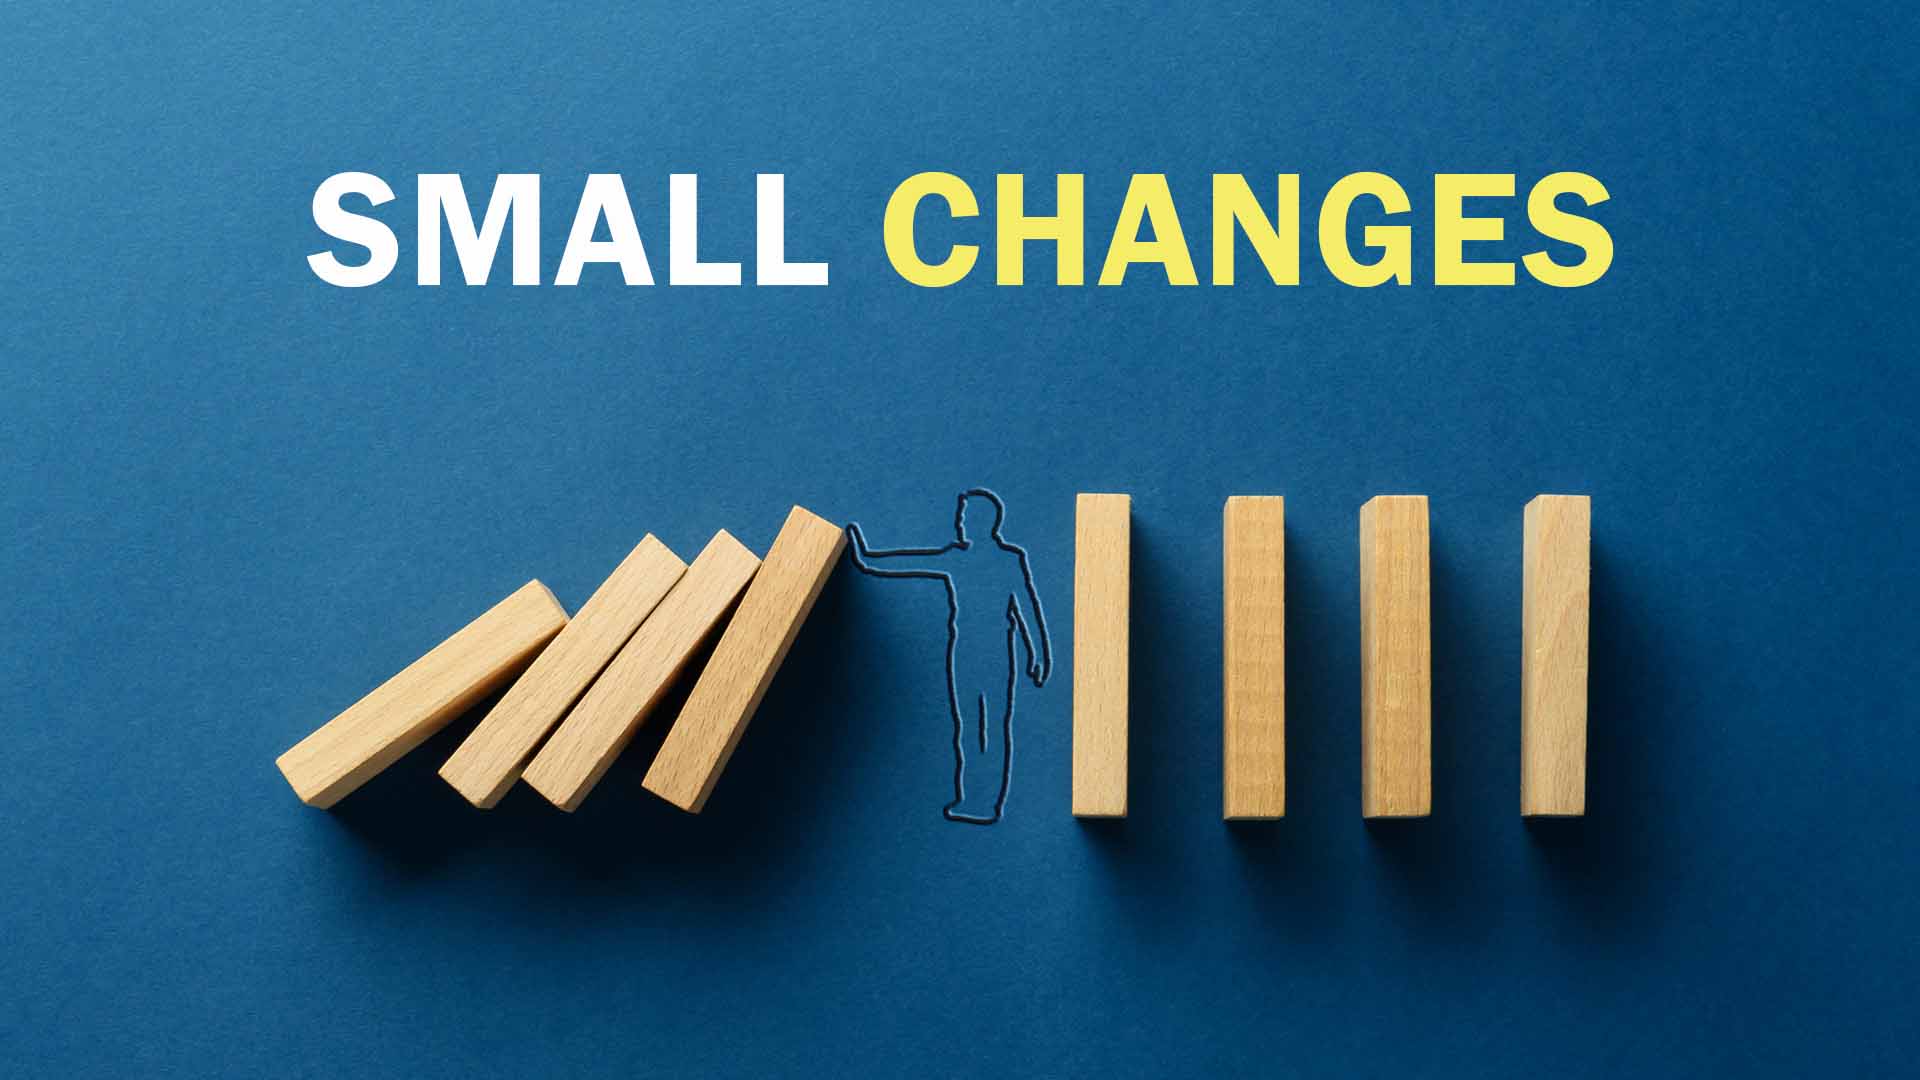 Small Change